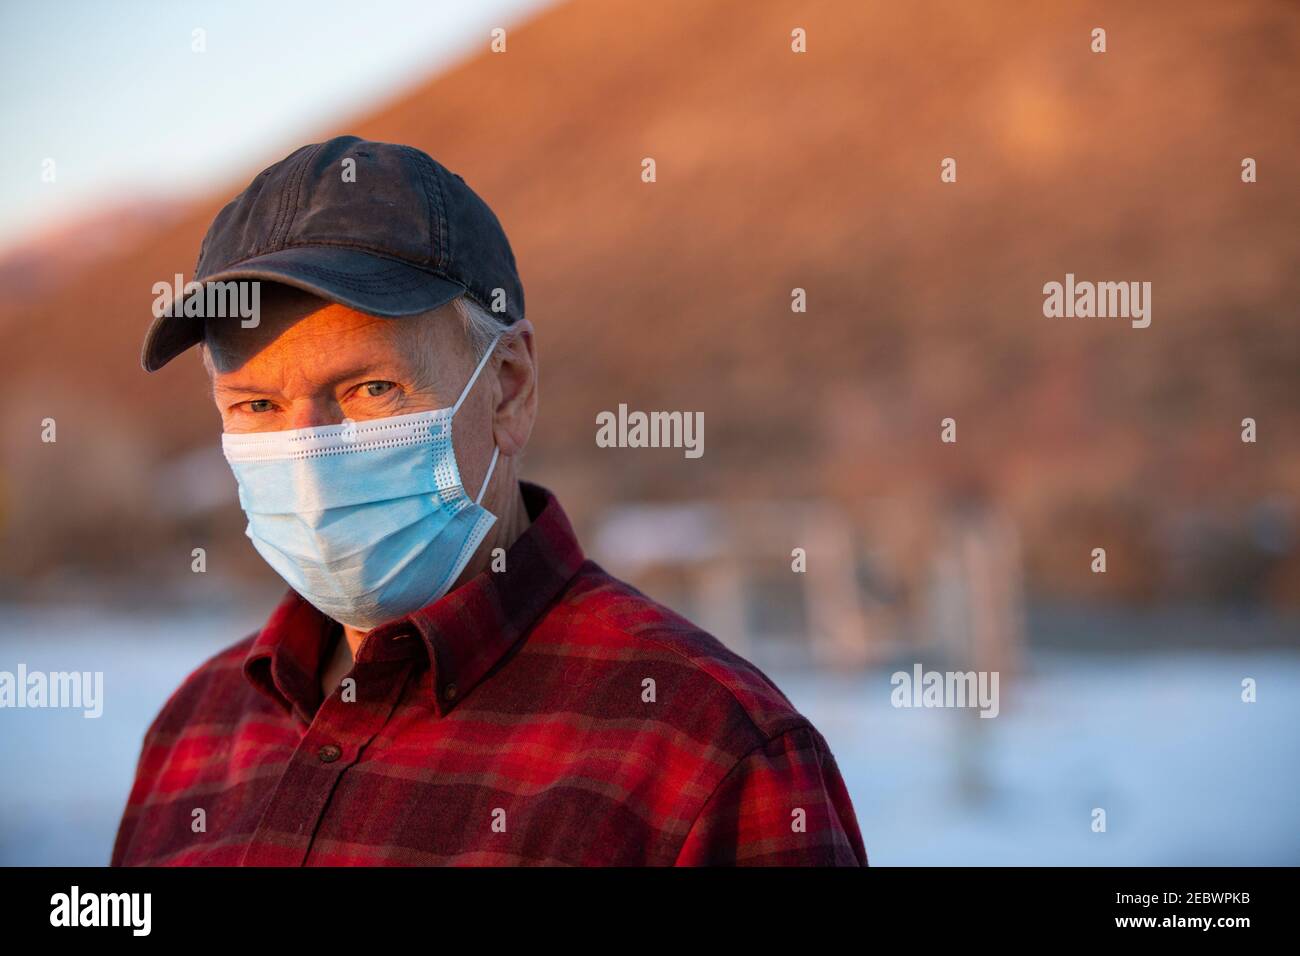 USA, Idaho, Bellevue, Outdoor portrait of senior man wearing COVID protective mask Stock Photo